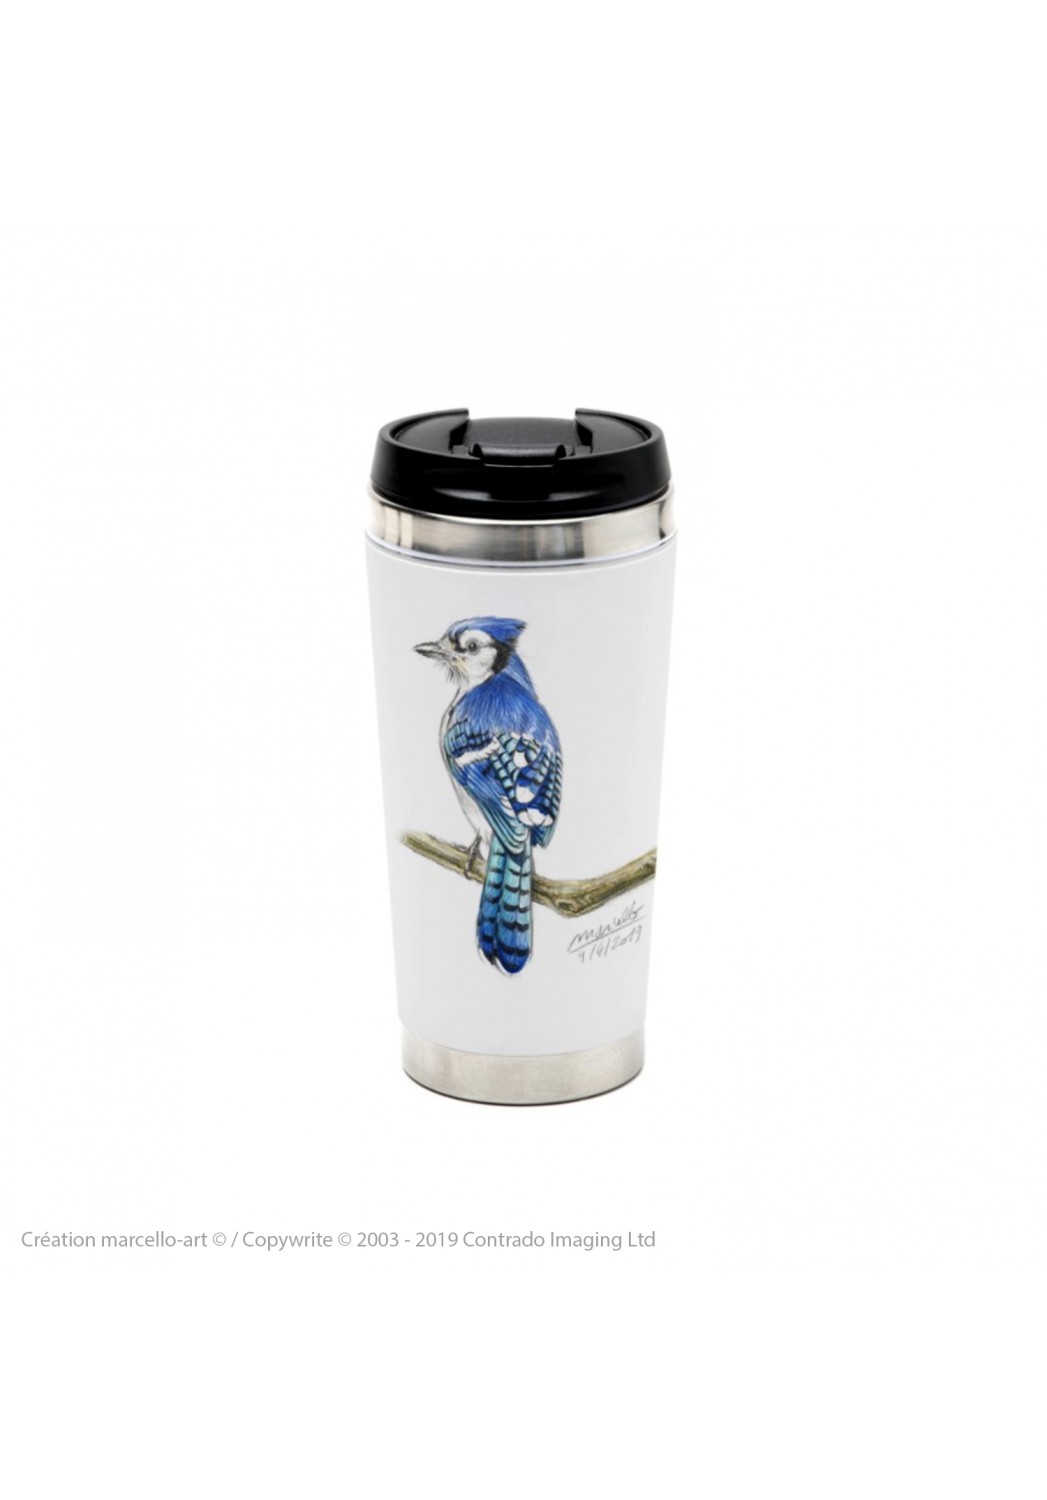 Marcello-art: Decoration accessoiries Thermos mug 393 blue jay